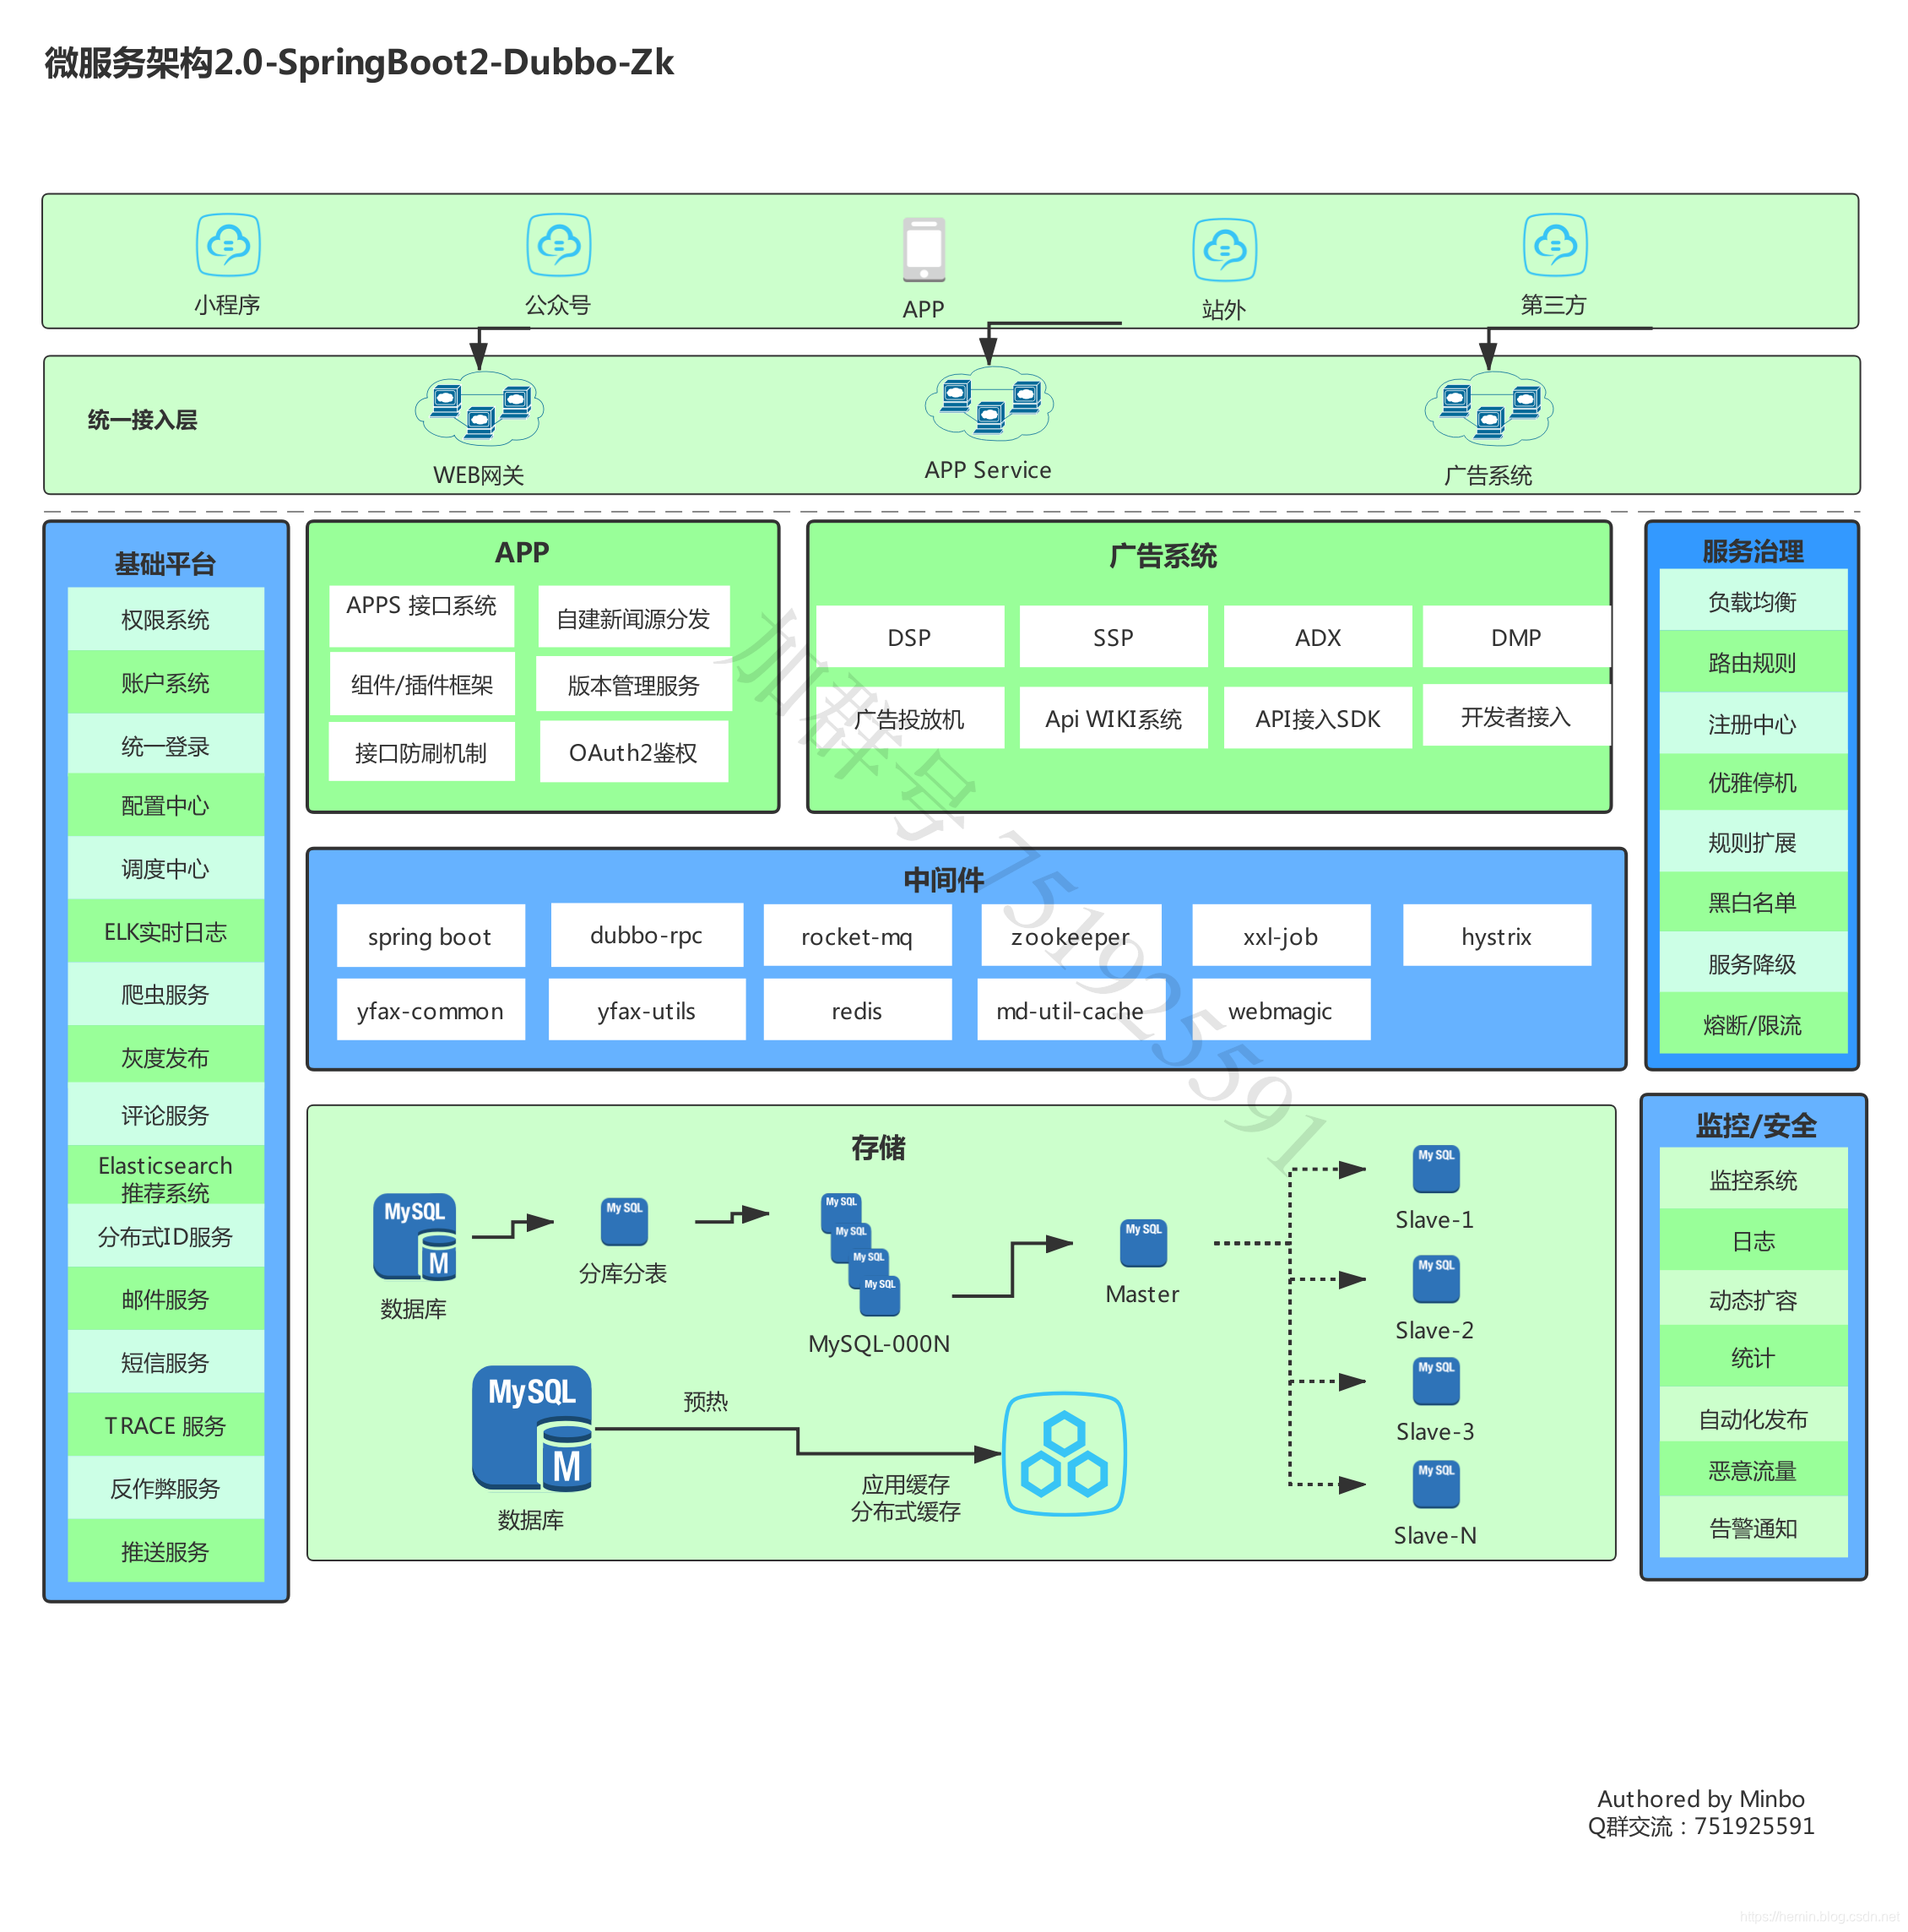 ARM集群服务器的解决方案 | ScenSmart一站式智能制造平台|OEM|ODM|行业方案